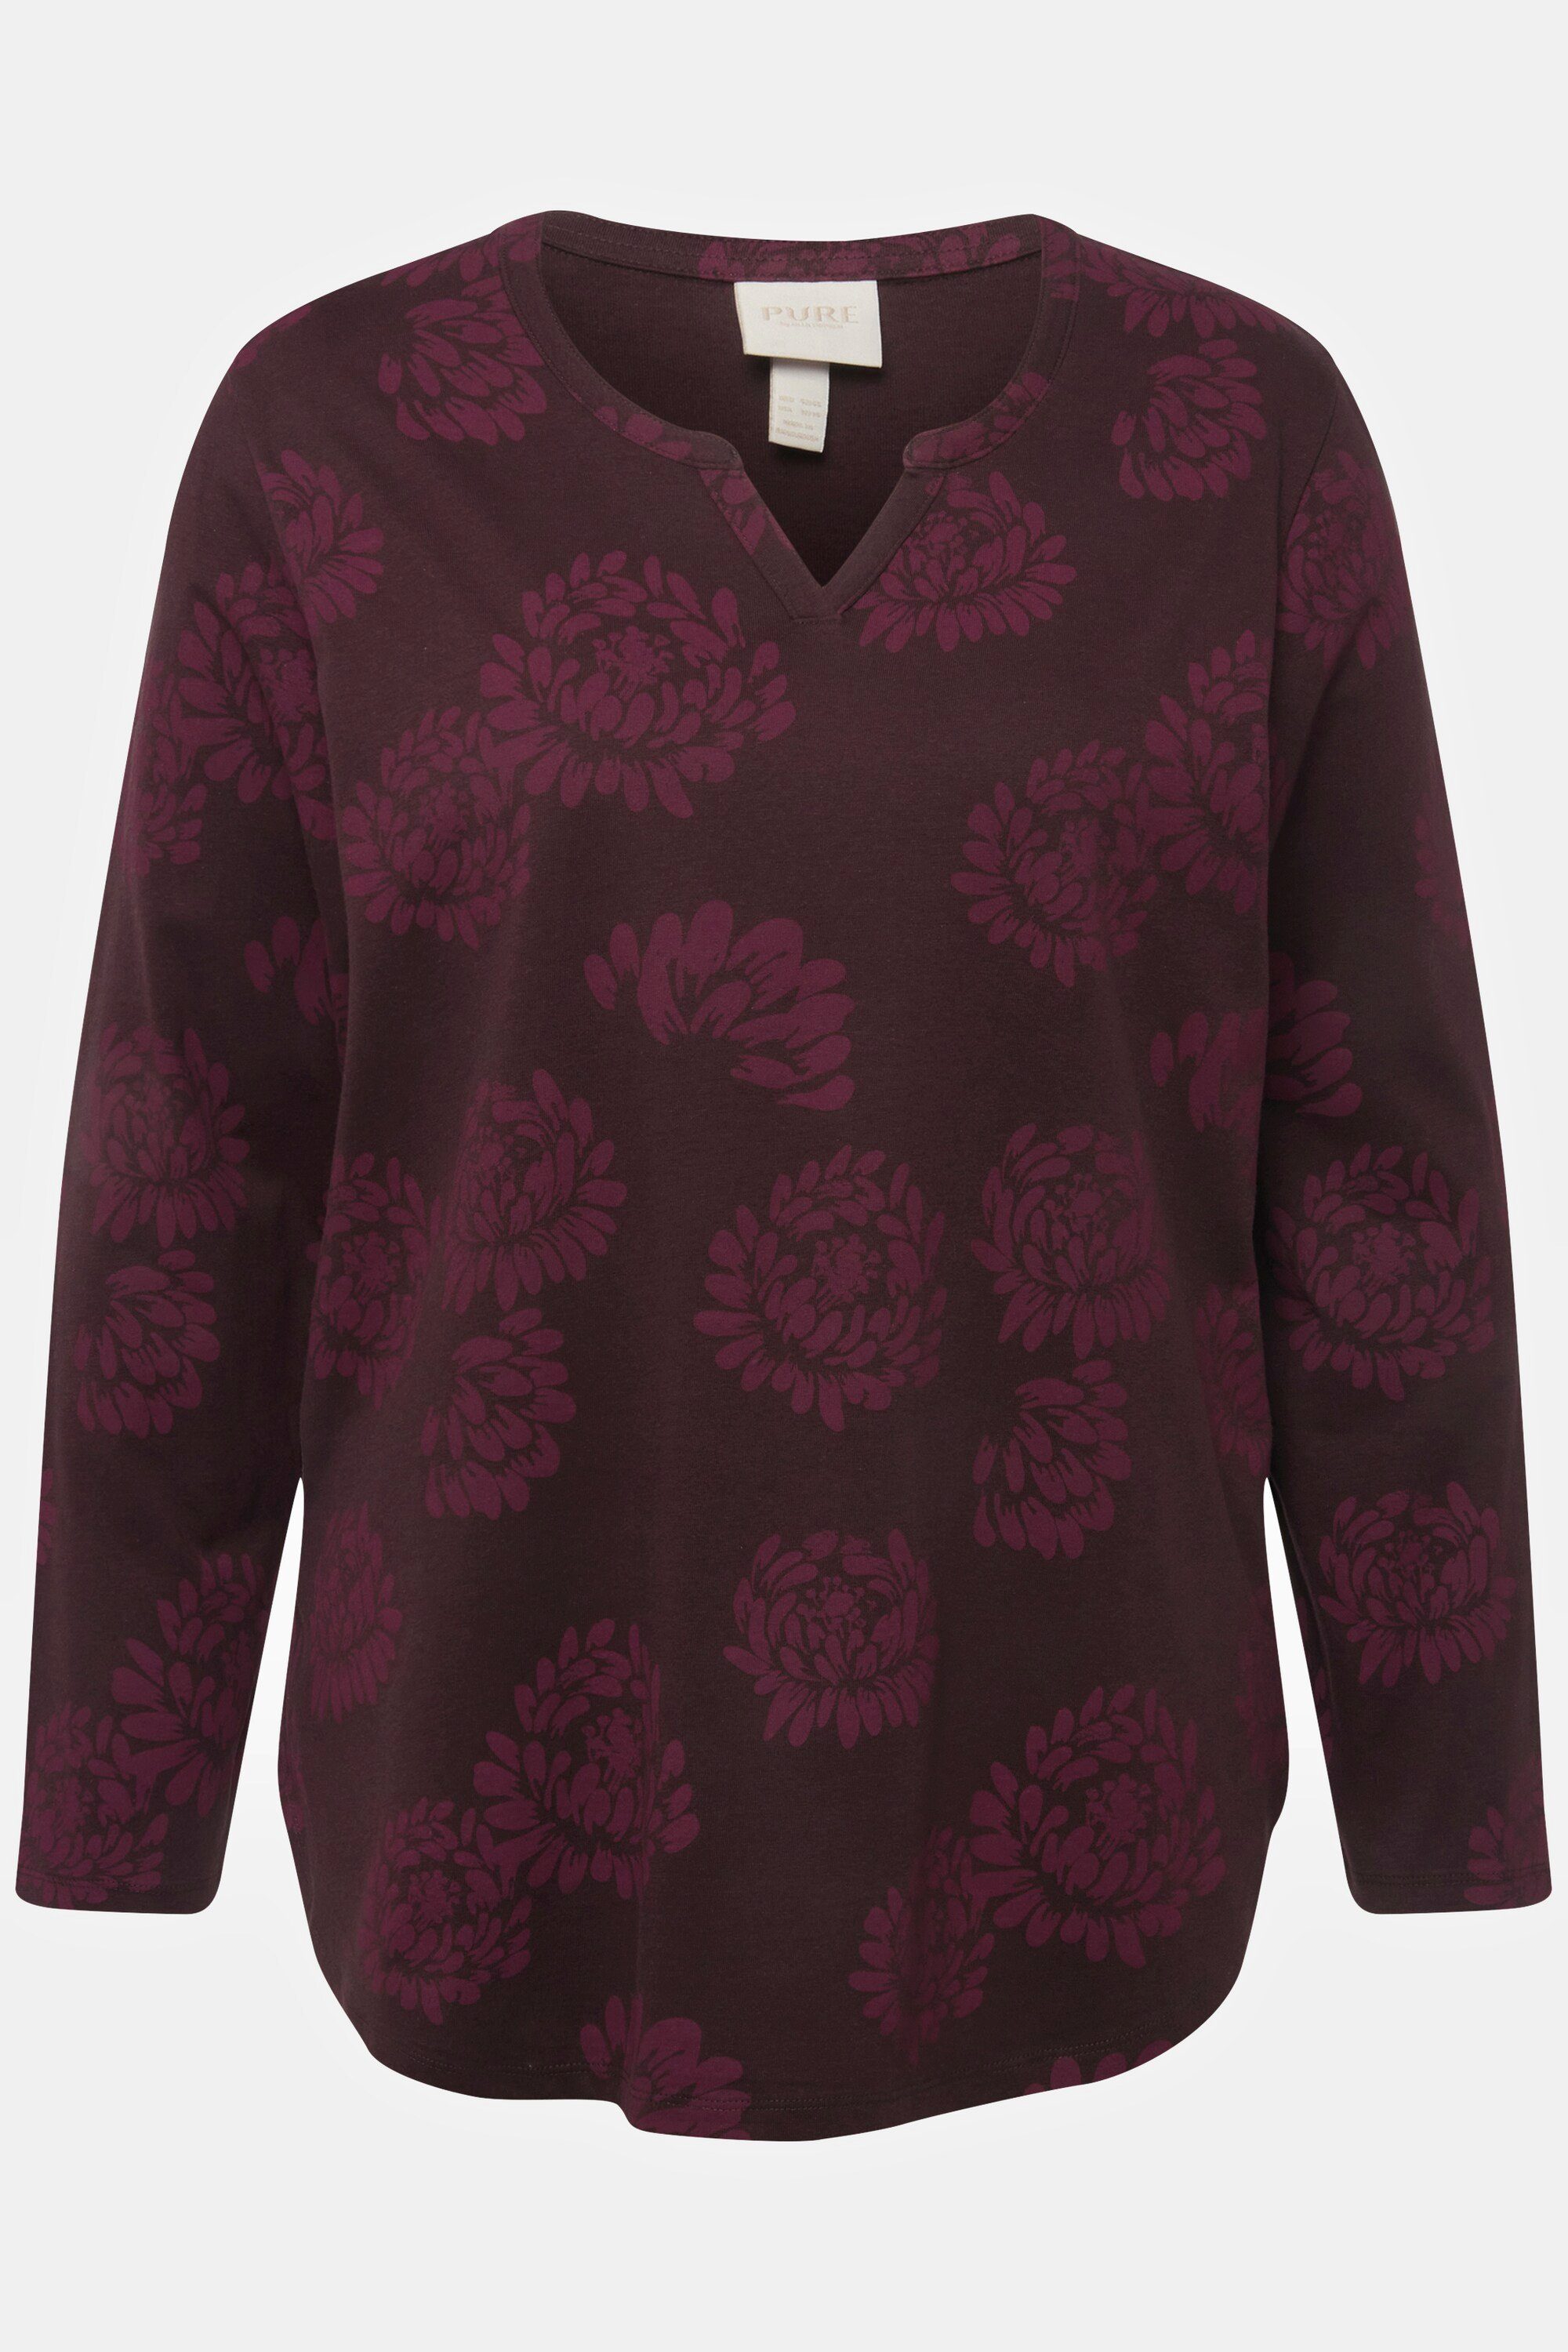 Ulla Popken Pyjamaoberteil Pyjama-Shirt Tunika-Ausschnitt floraler rot Druck